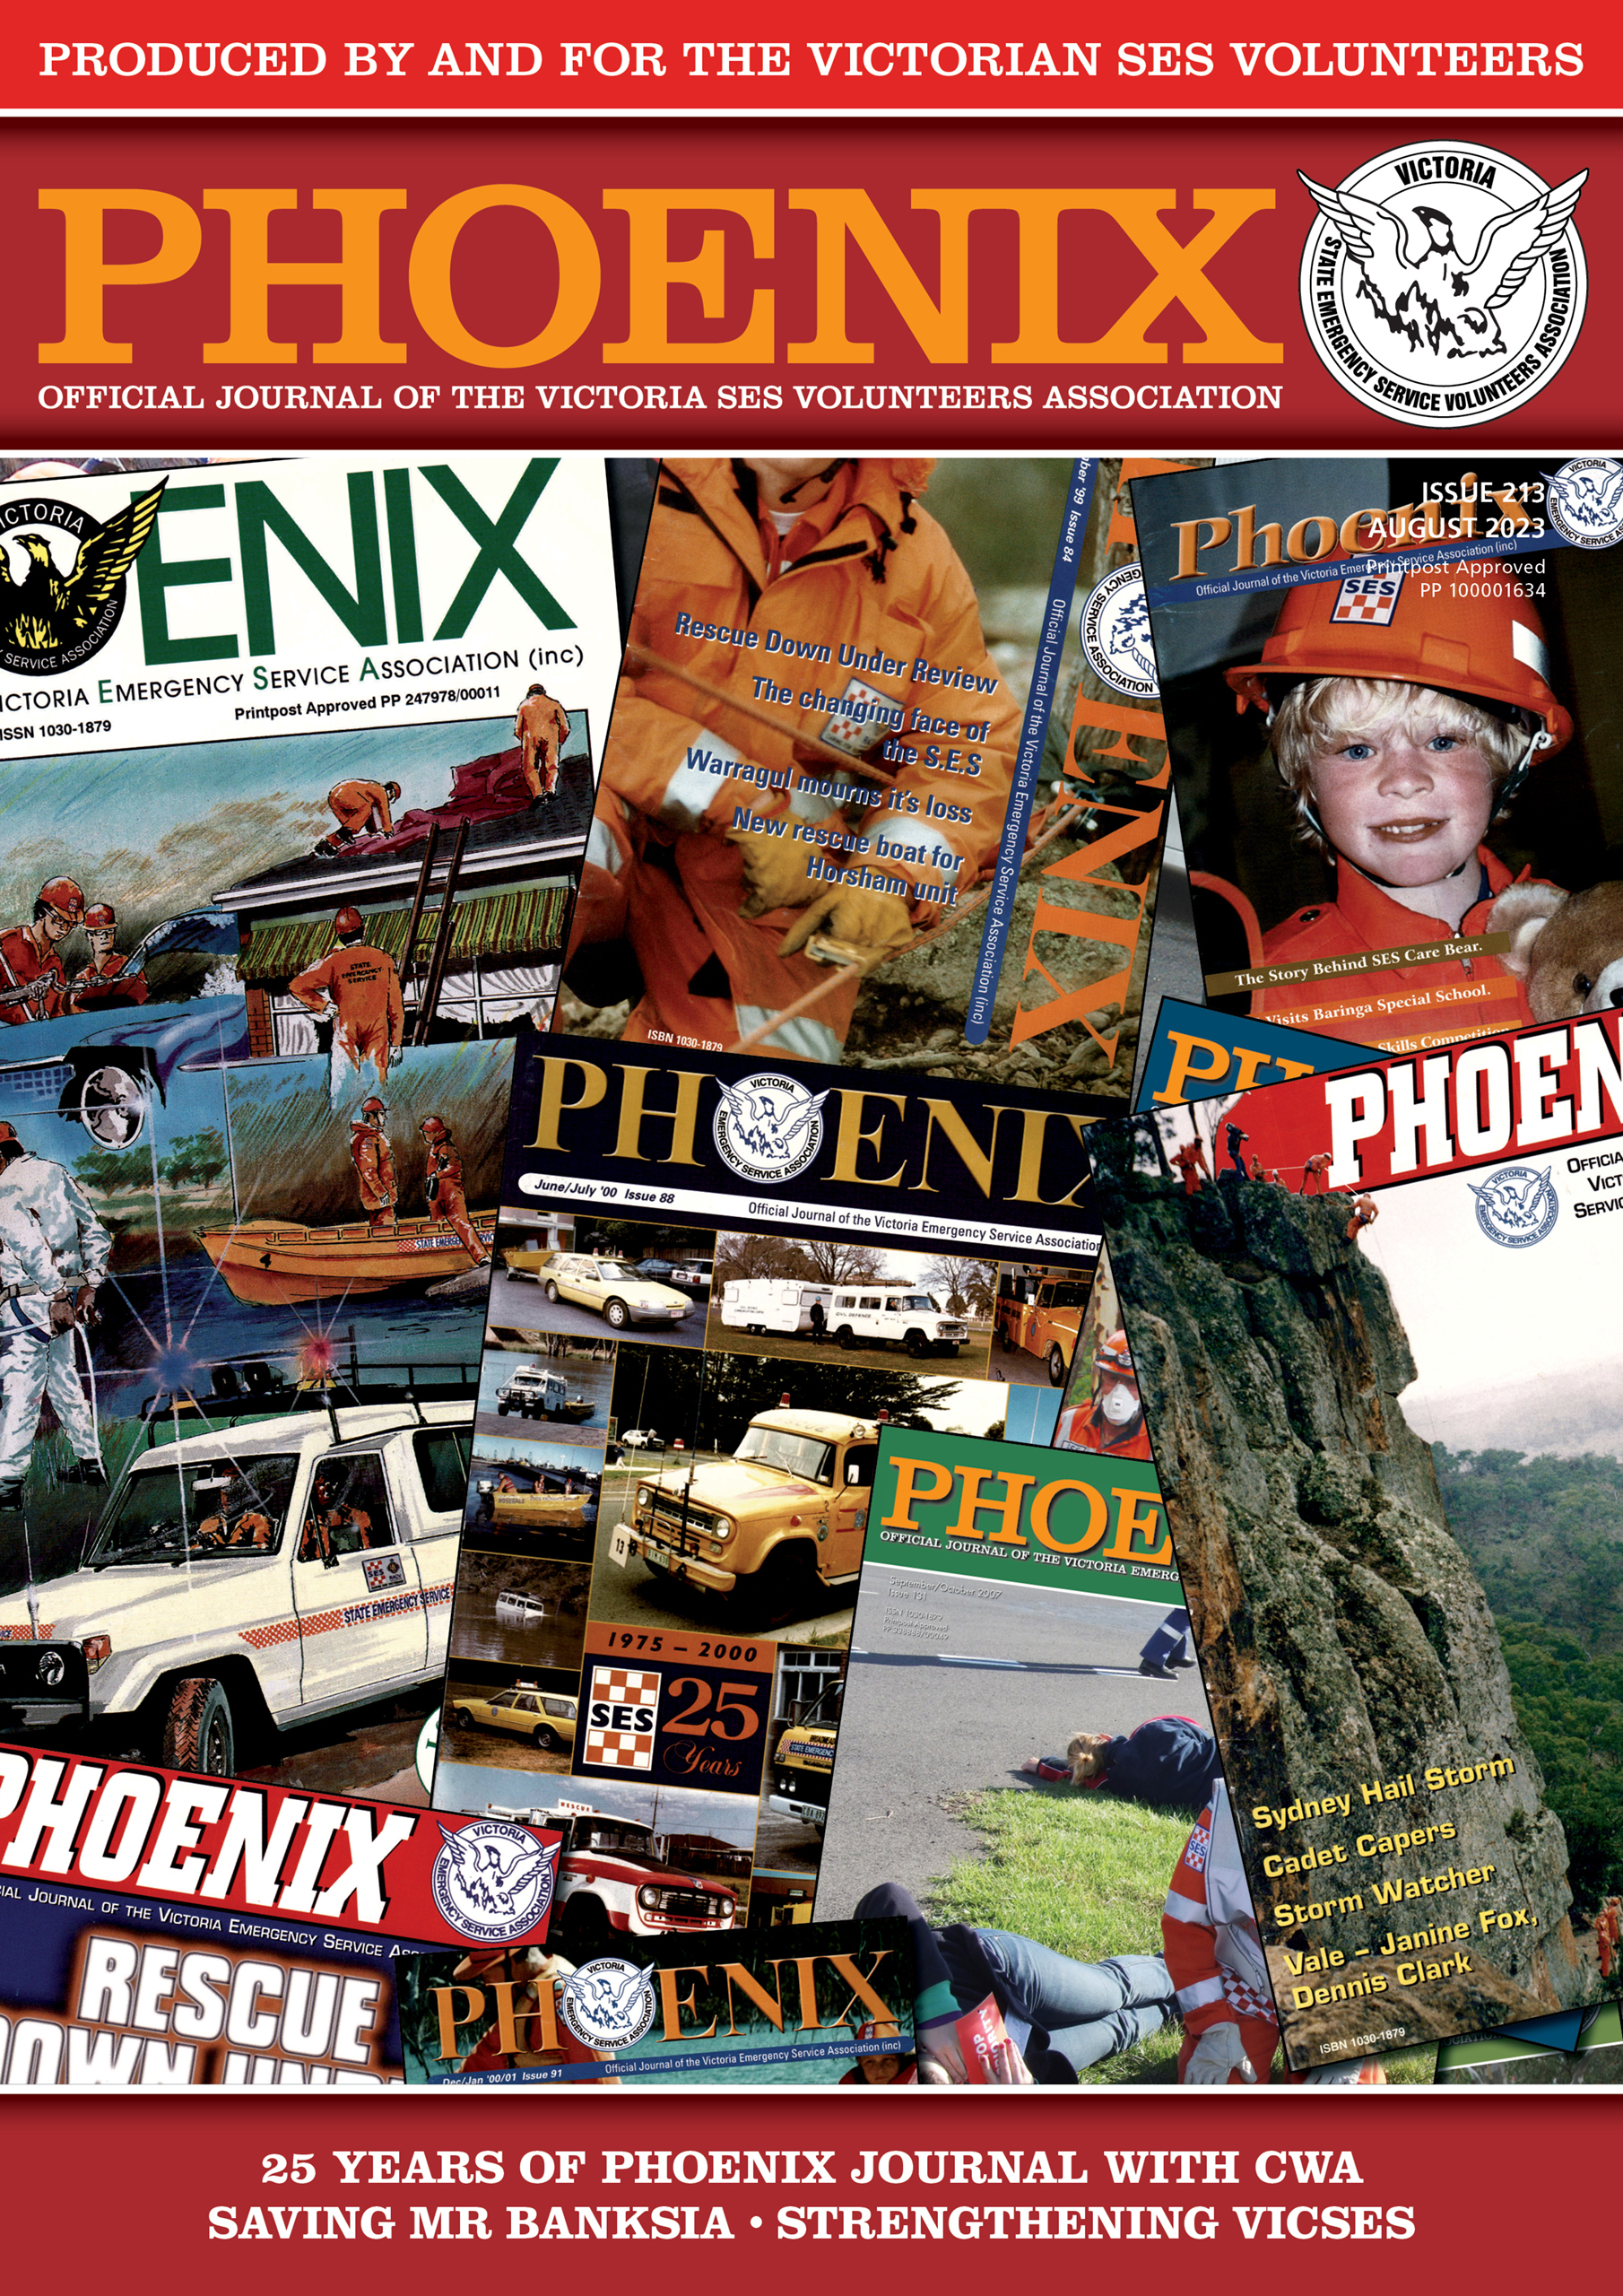 Phoenix Journal